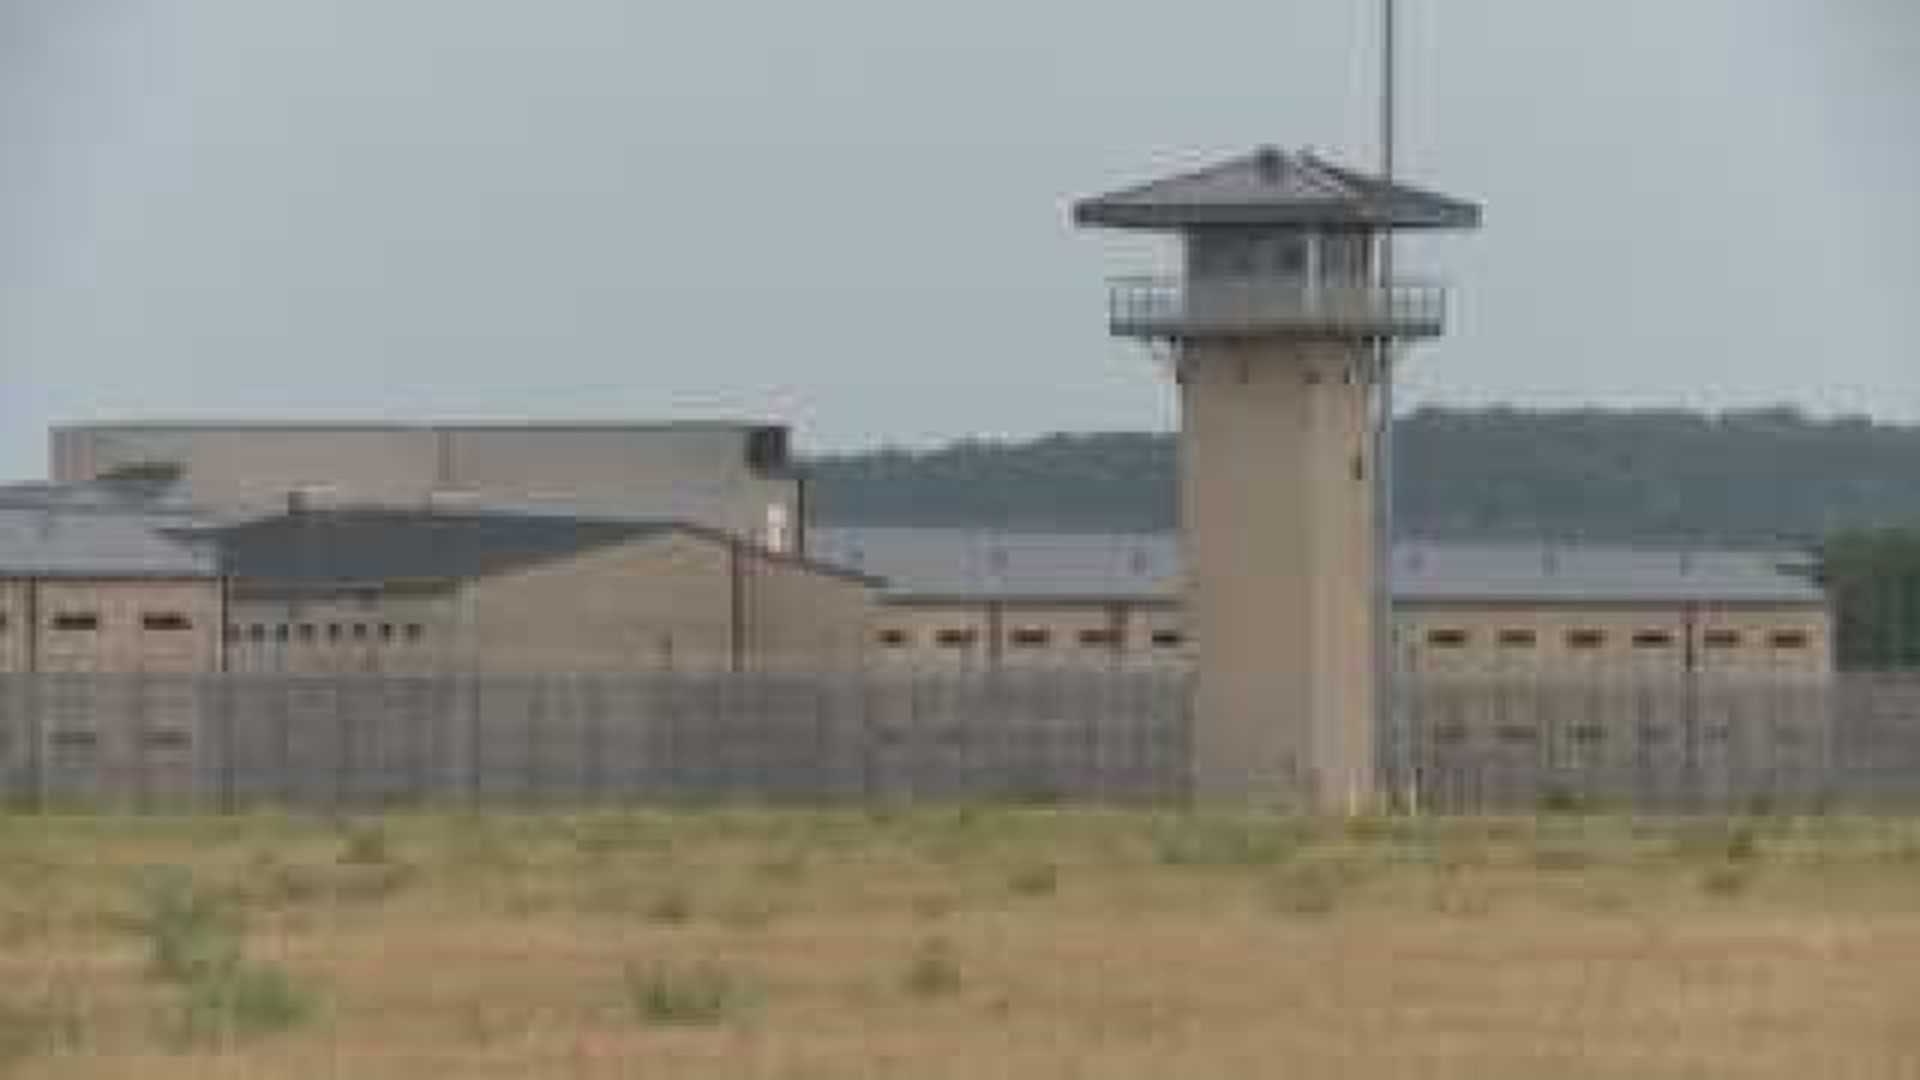 Thomson Prison